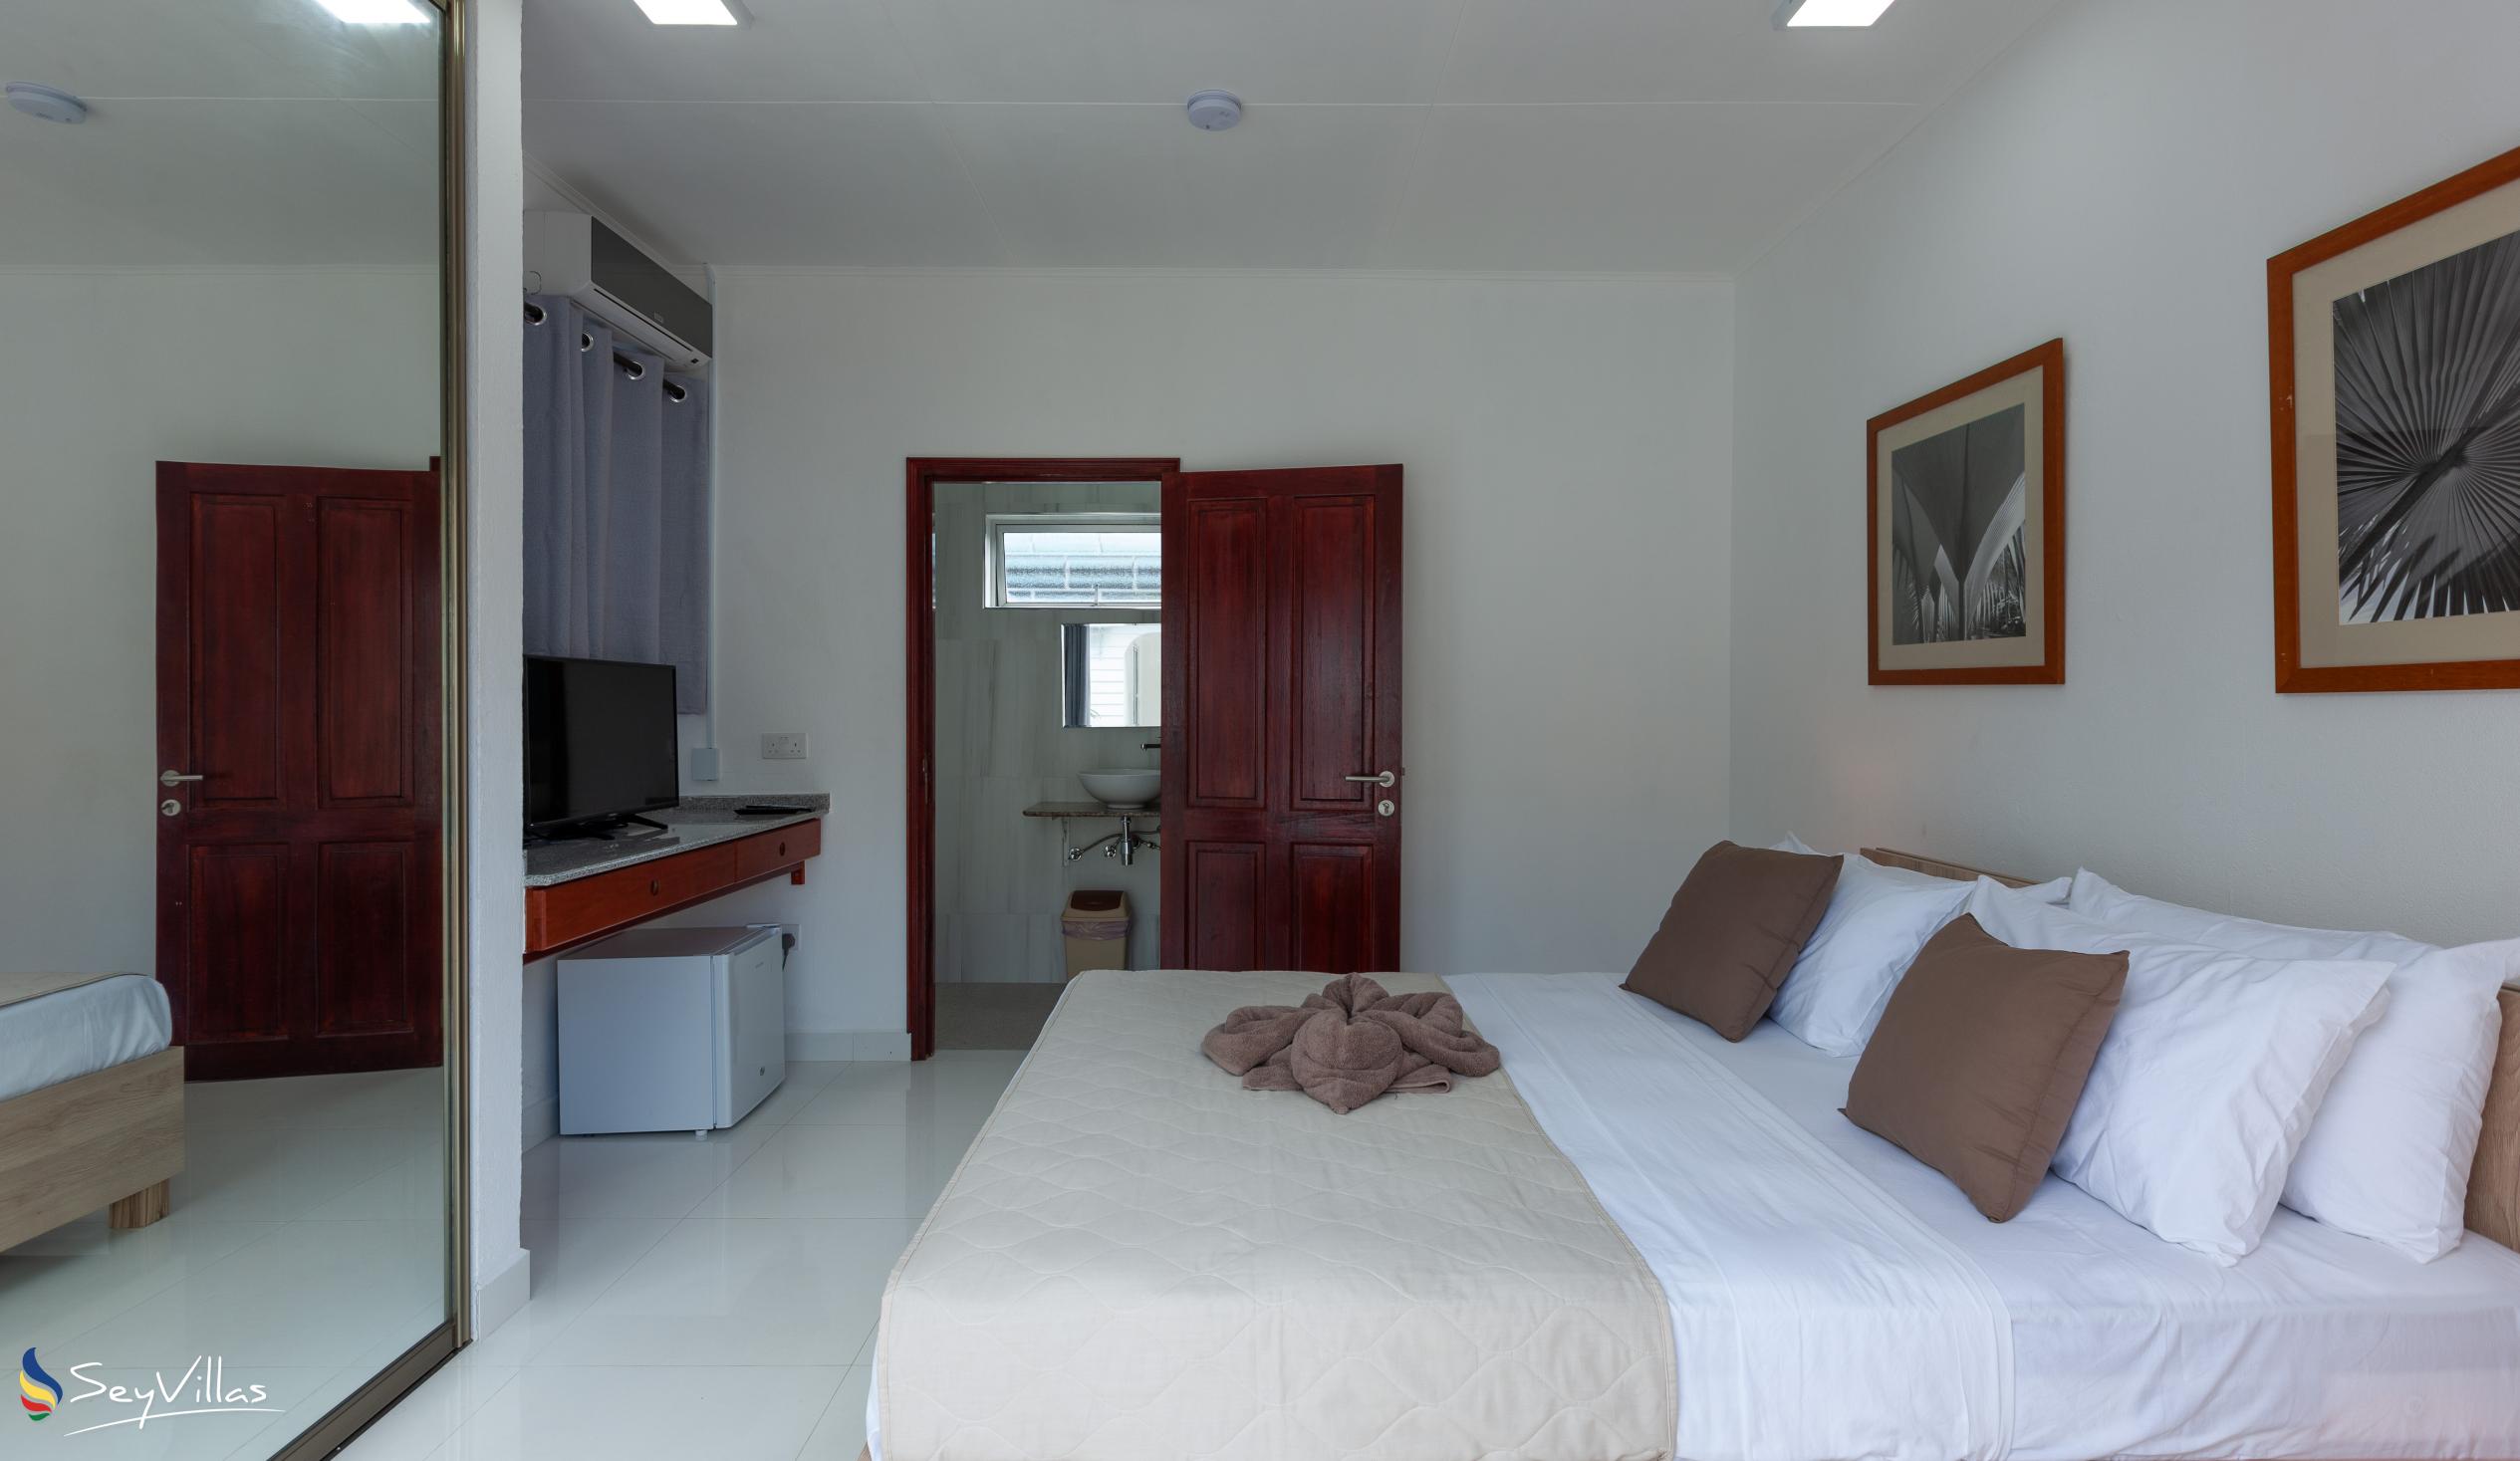 Foto 27: Hotel Plein Soleil - Camera Deluxe con letto queensize - Praslin (Seychelles)